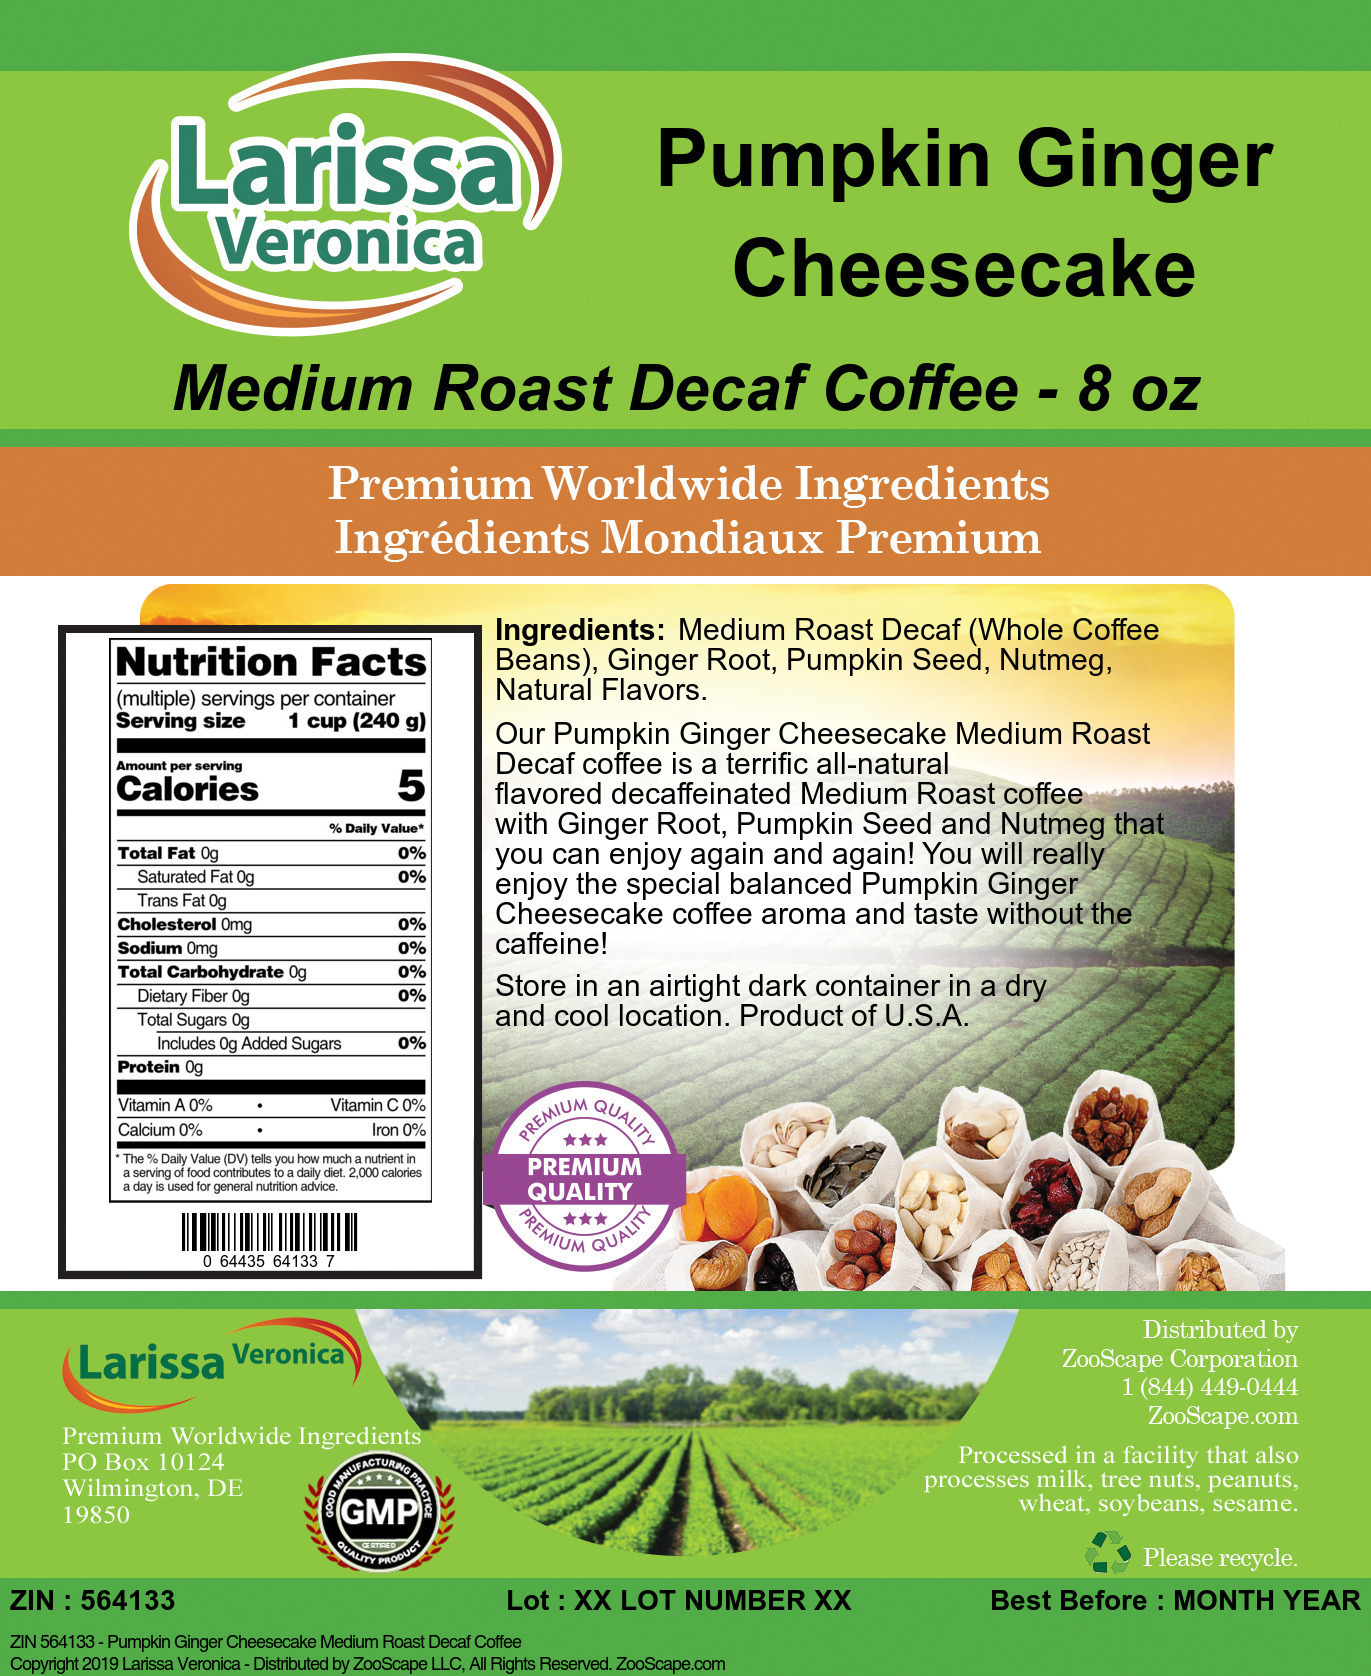 Pumpkin Ginger Cheesecake Medium Roast Decaf Coffee - Label